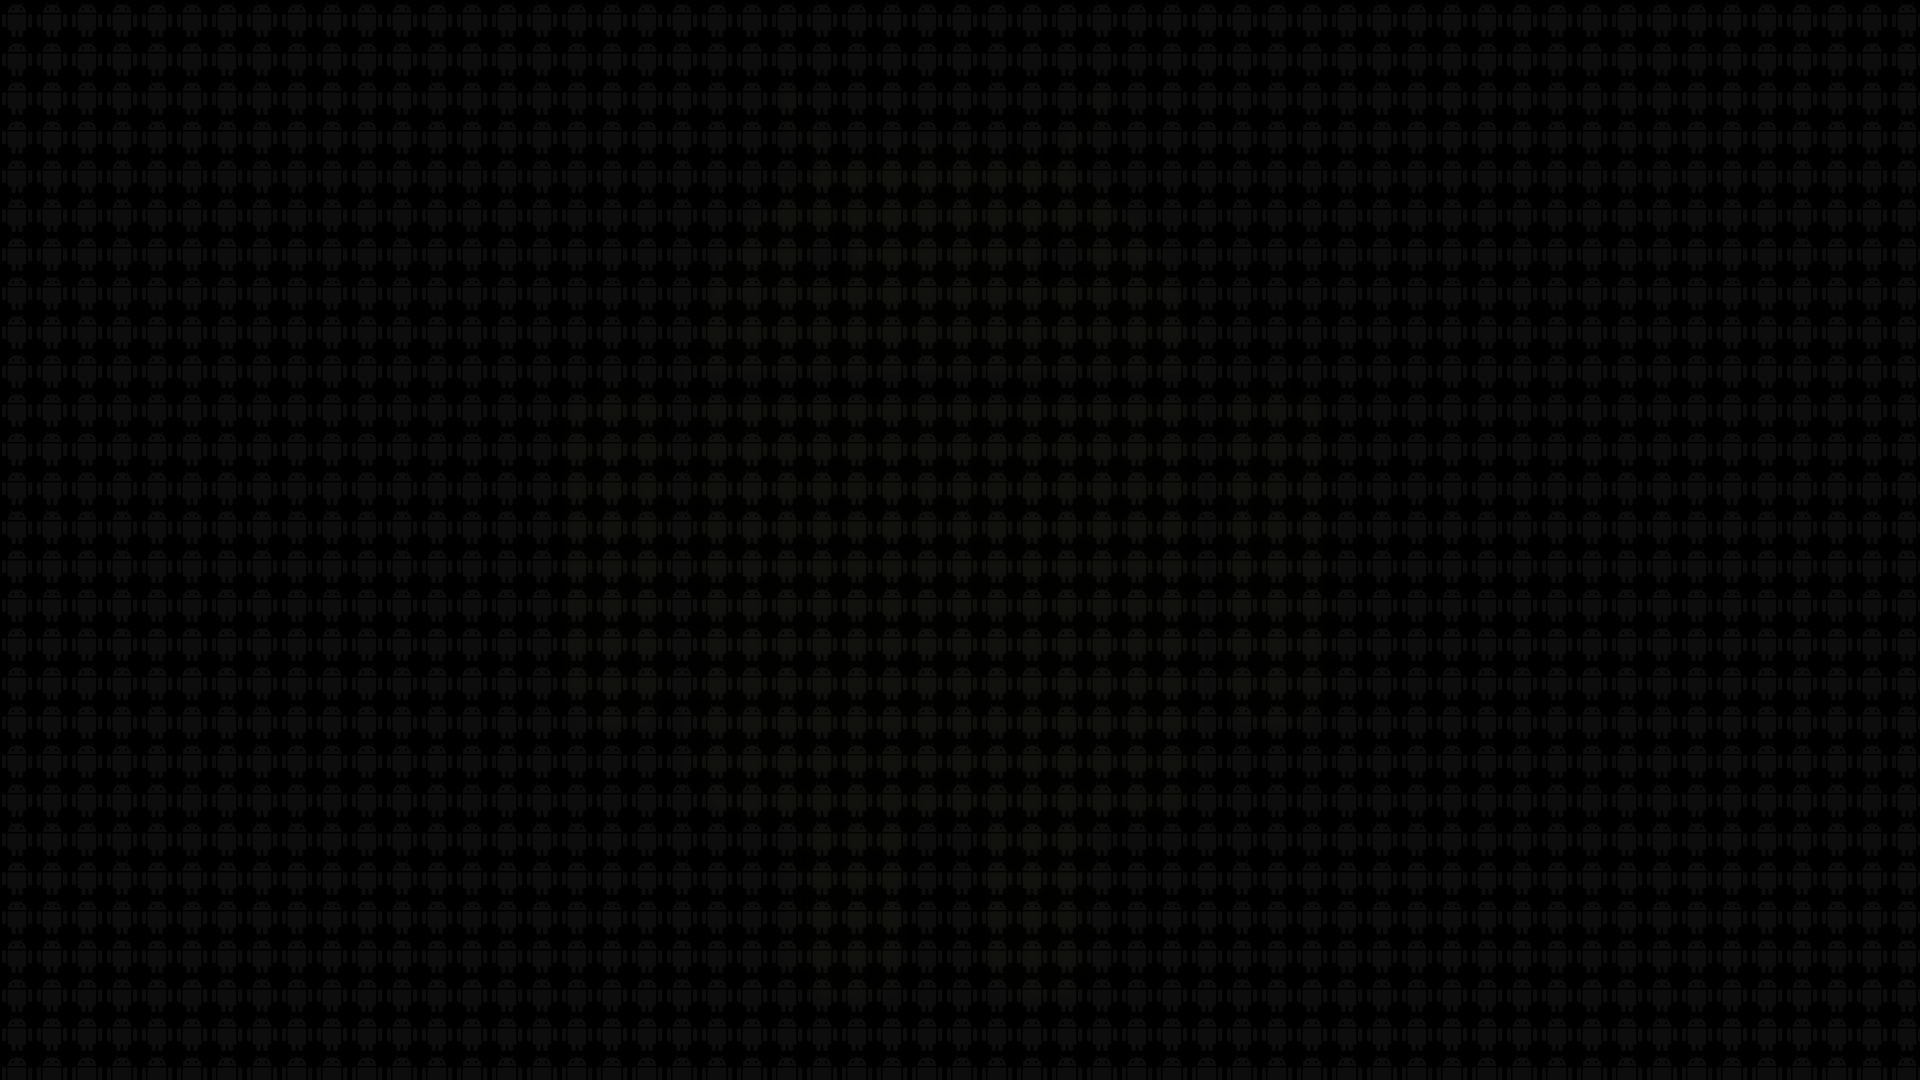 Black Grid Wallpaper